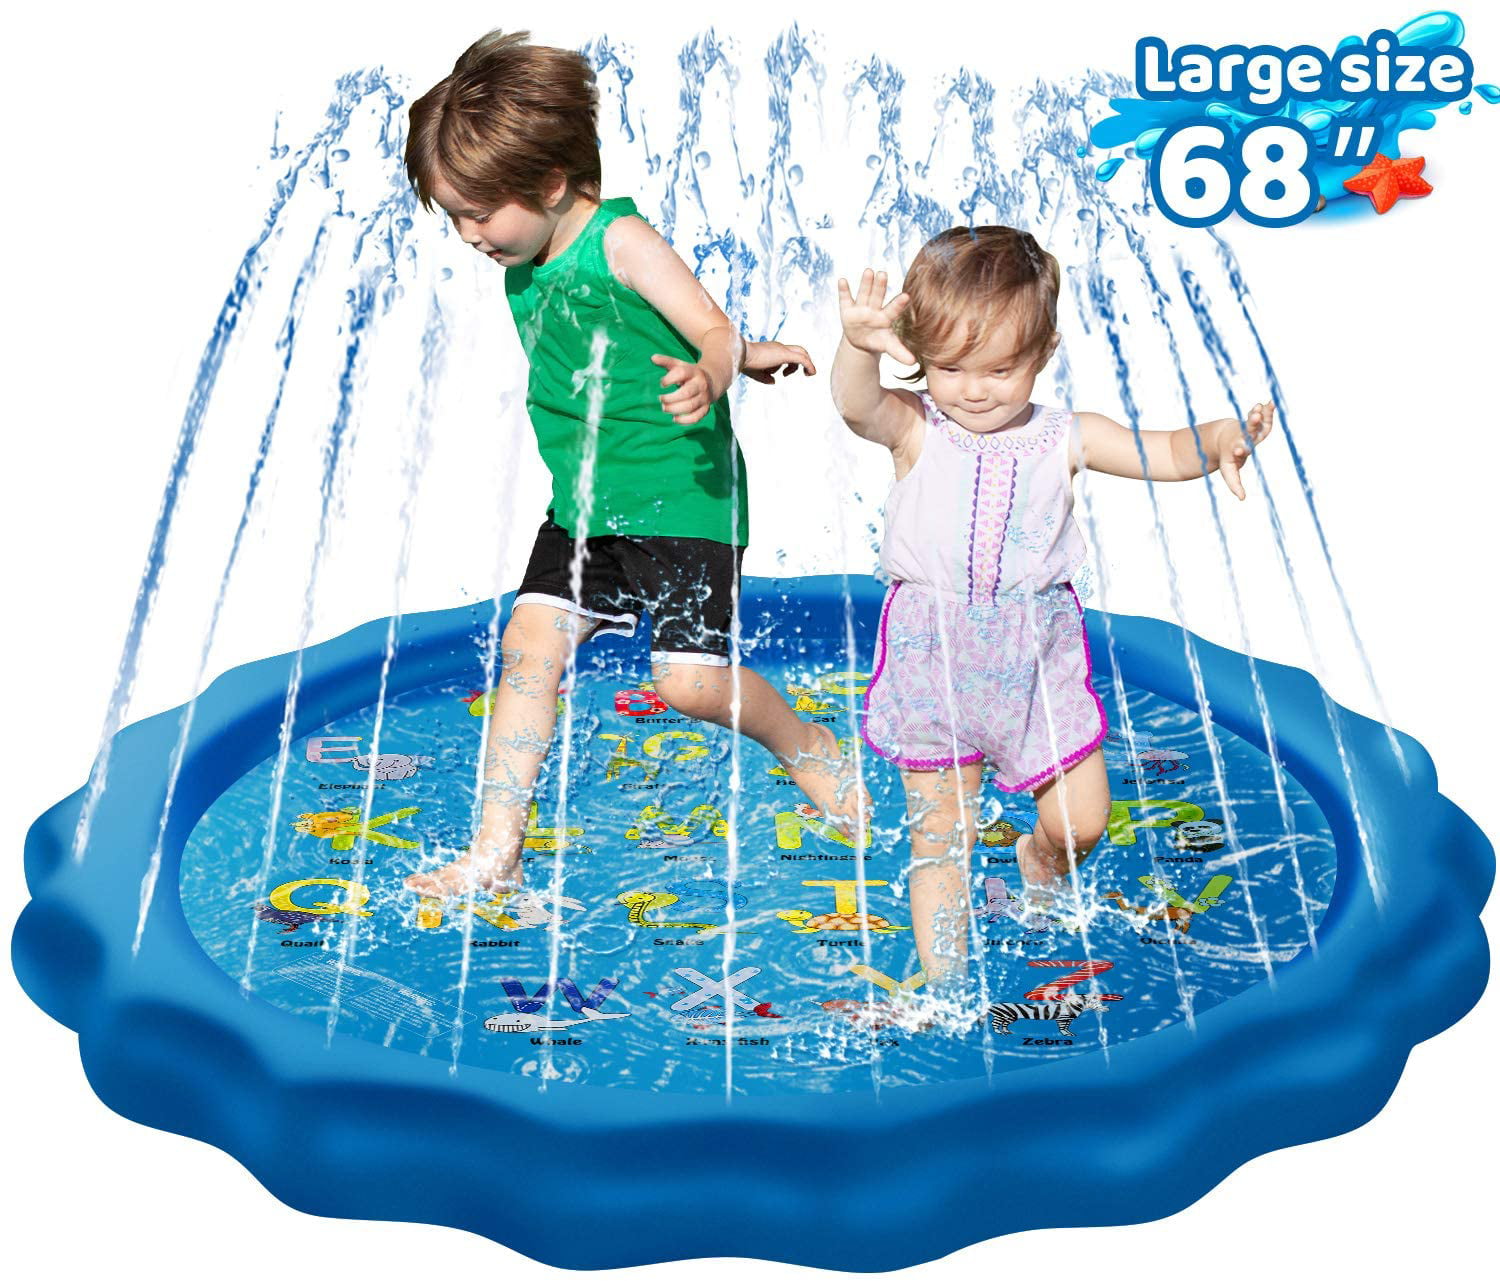 Upgraded 67 Inflatable Outside Sprinkle & Splash Play Mat for Kids Outdoor Backyard Toddler Sprinkler Pool for 1-12 Year Old Babies Boys 2-in-1 Splash Pad Blue Girls 